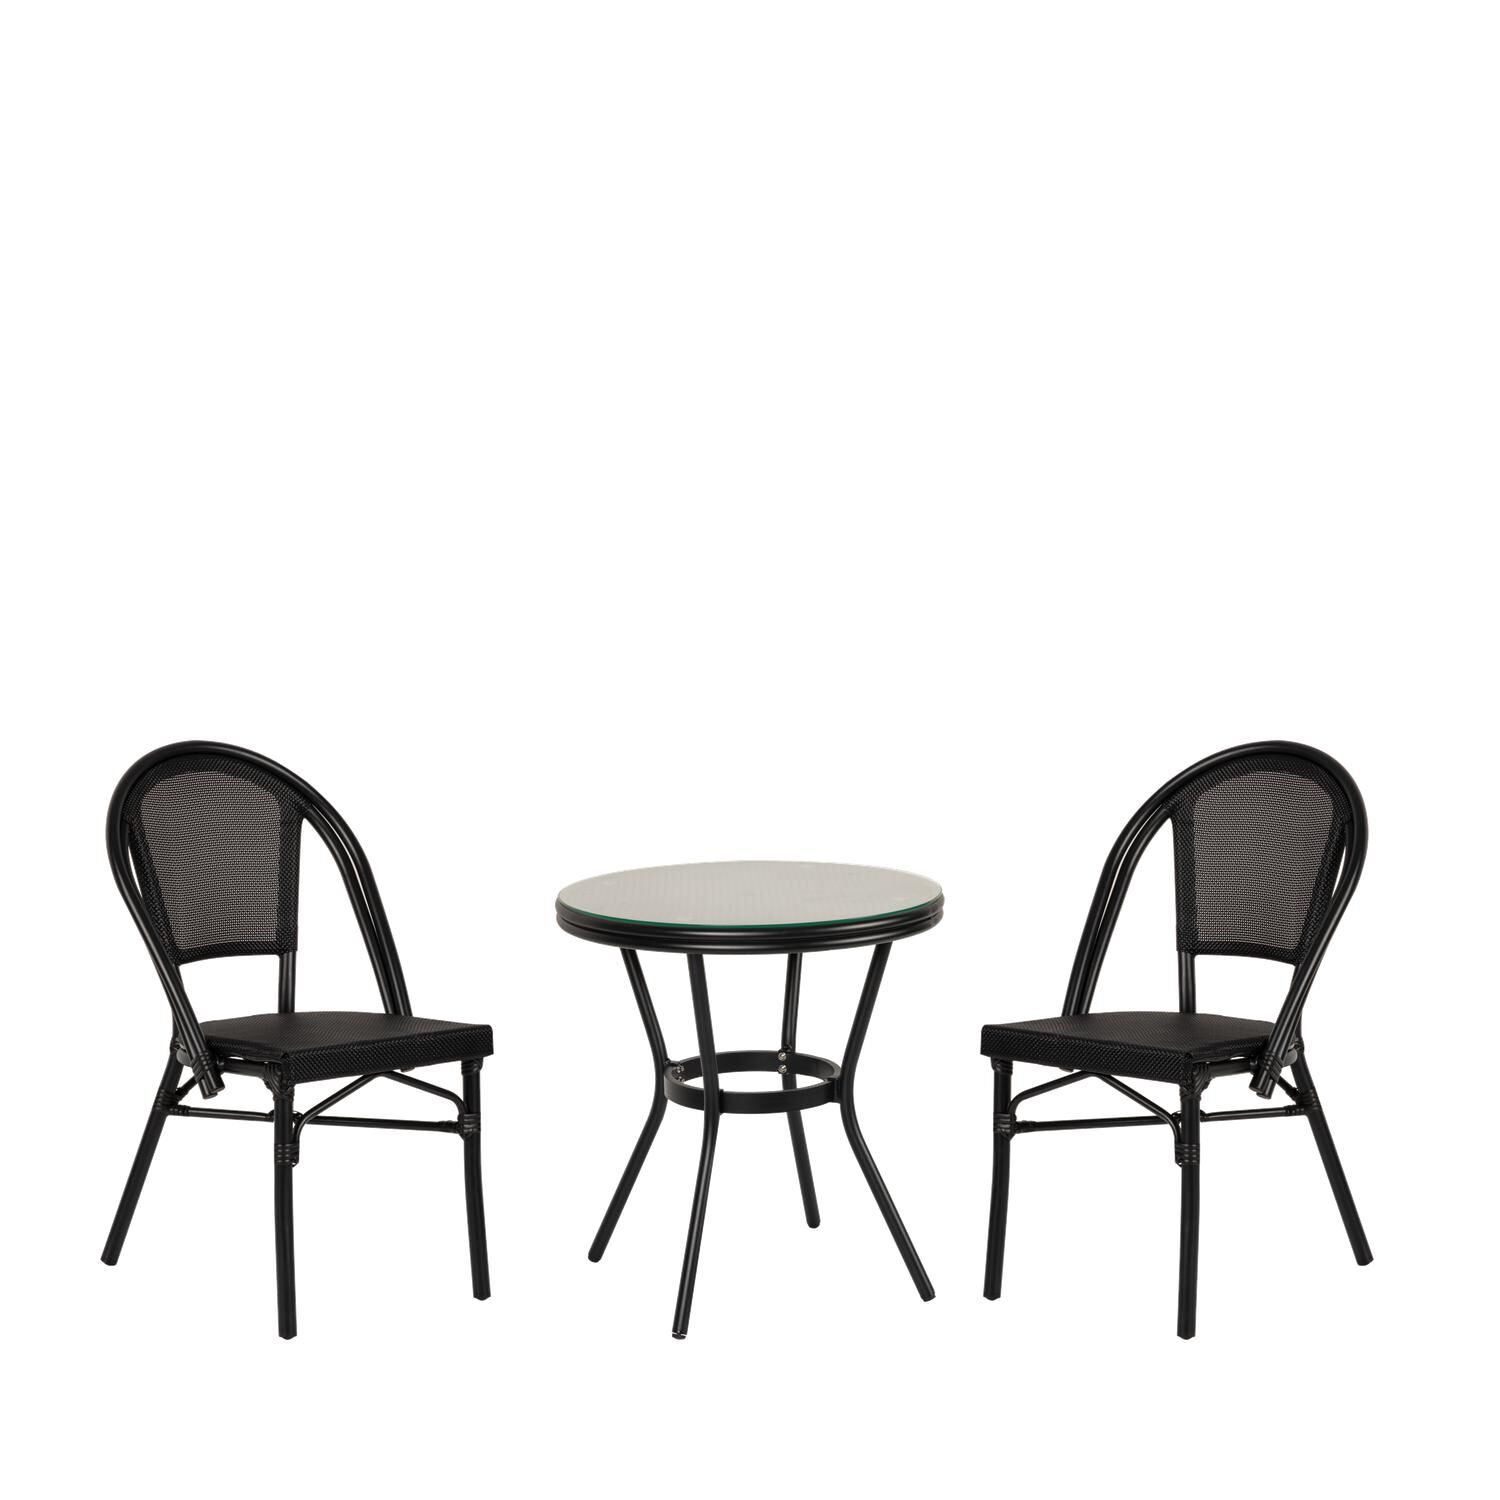 BURUNDI Garden Dining Set Black Aluminum/Glass With 2 Chairs 14990235